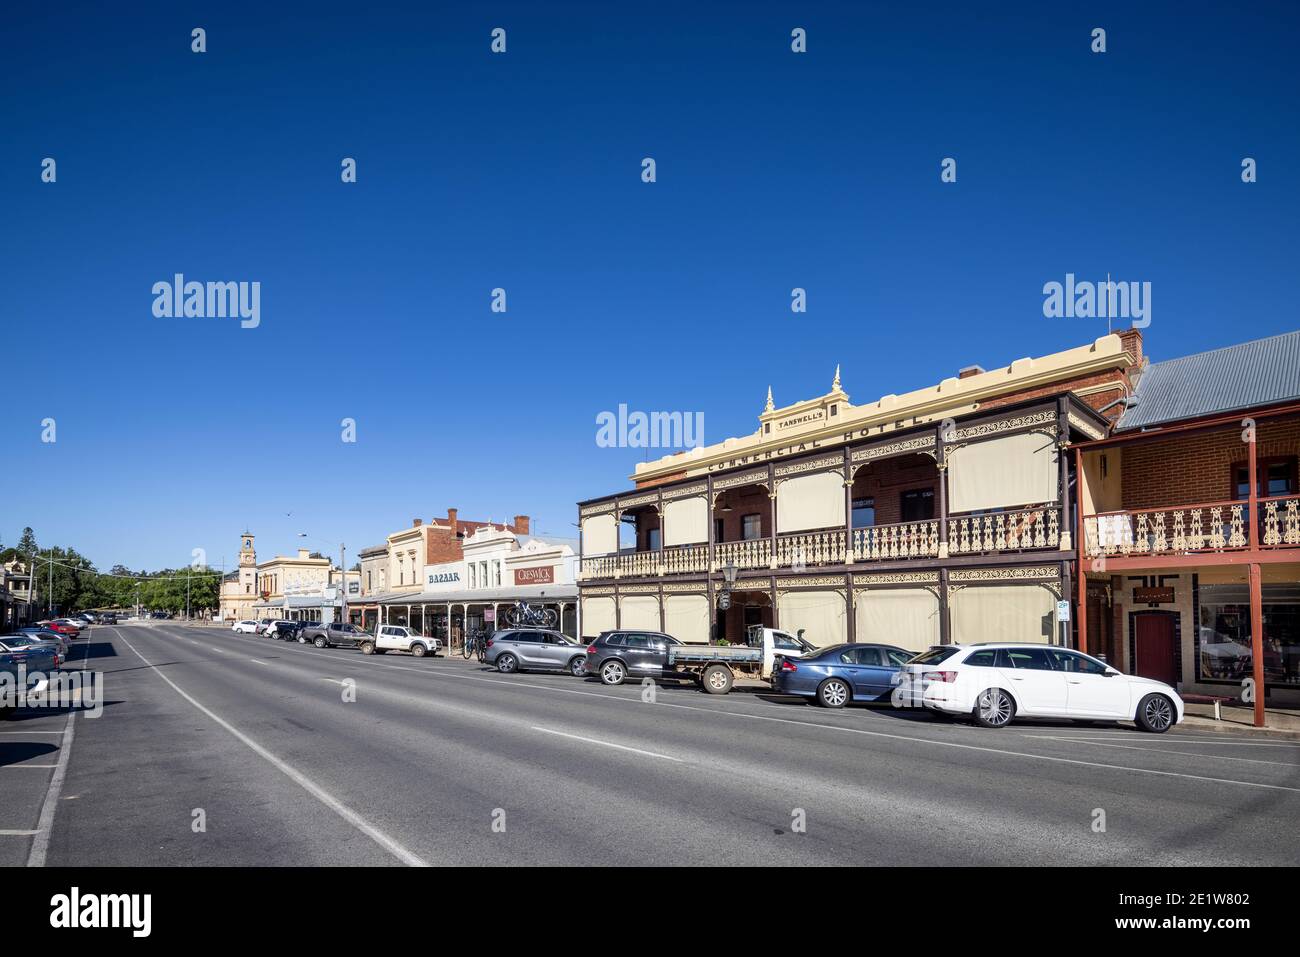 December 19th 2020 Beechworth Australia : Exterior view of the Commercial Hotel in Beechworth, Victoria, Australia Stock Photo